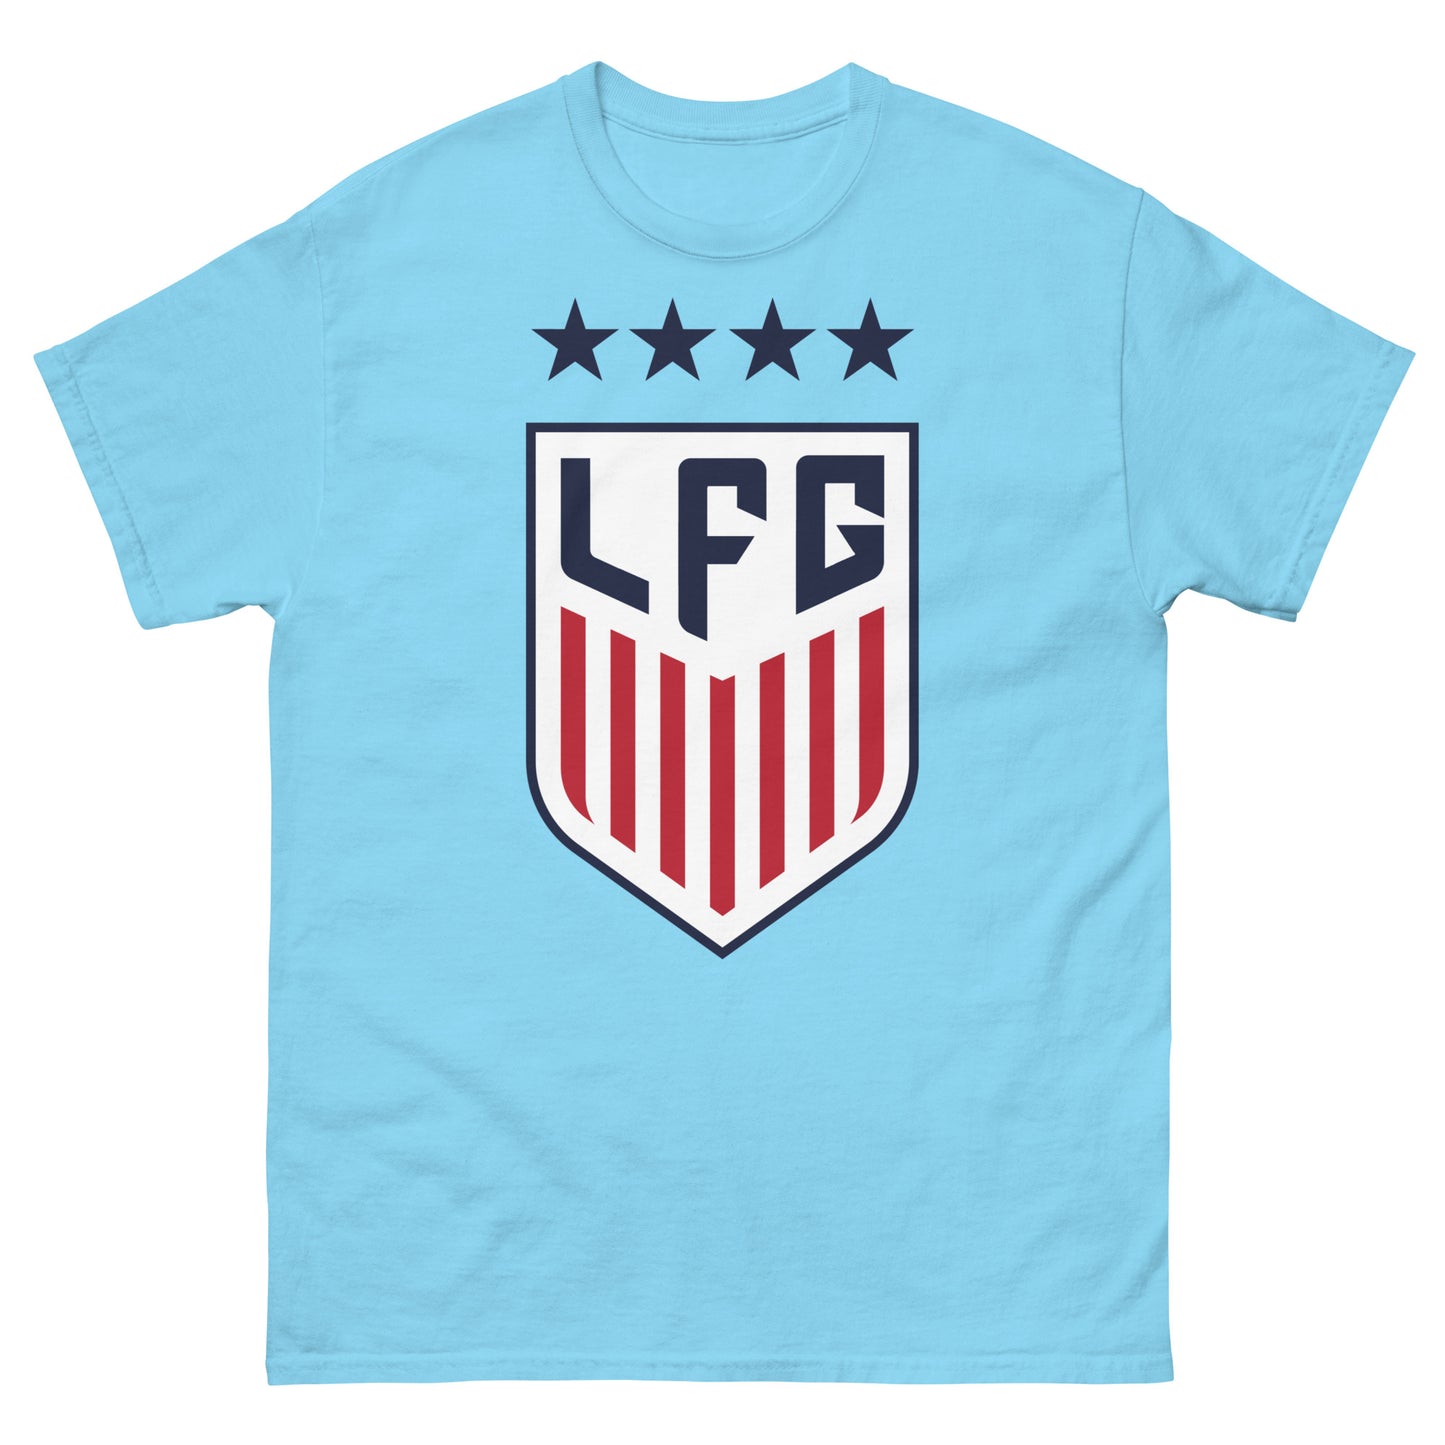 LFG US Soccer Style T-Shirt